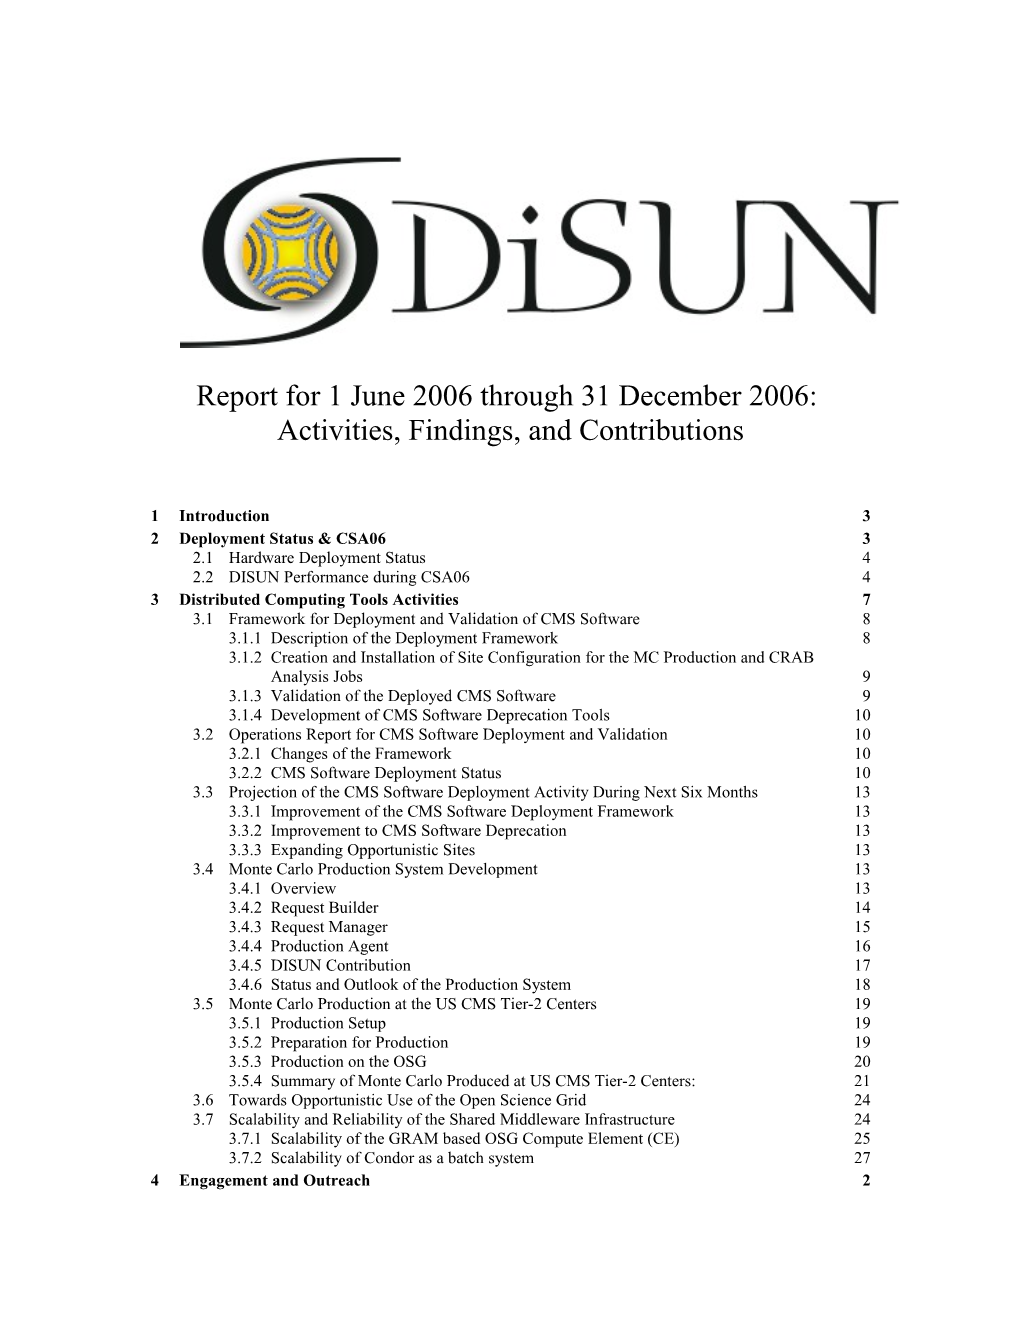 Report for 1 June 2006 Through 31 December 2006